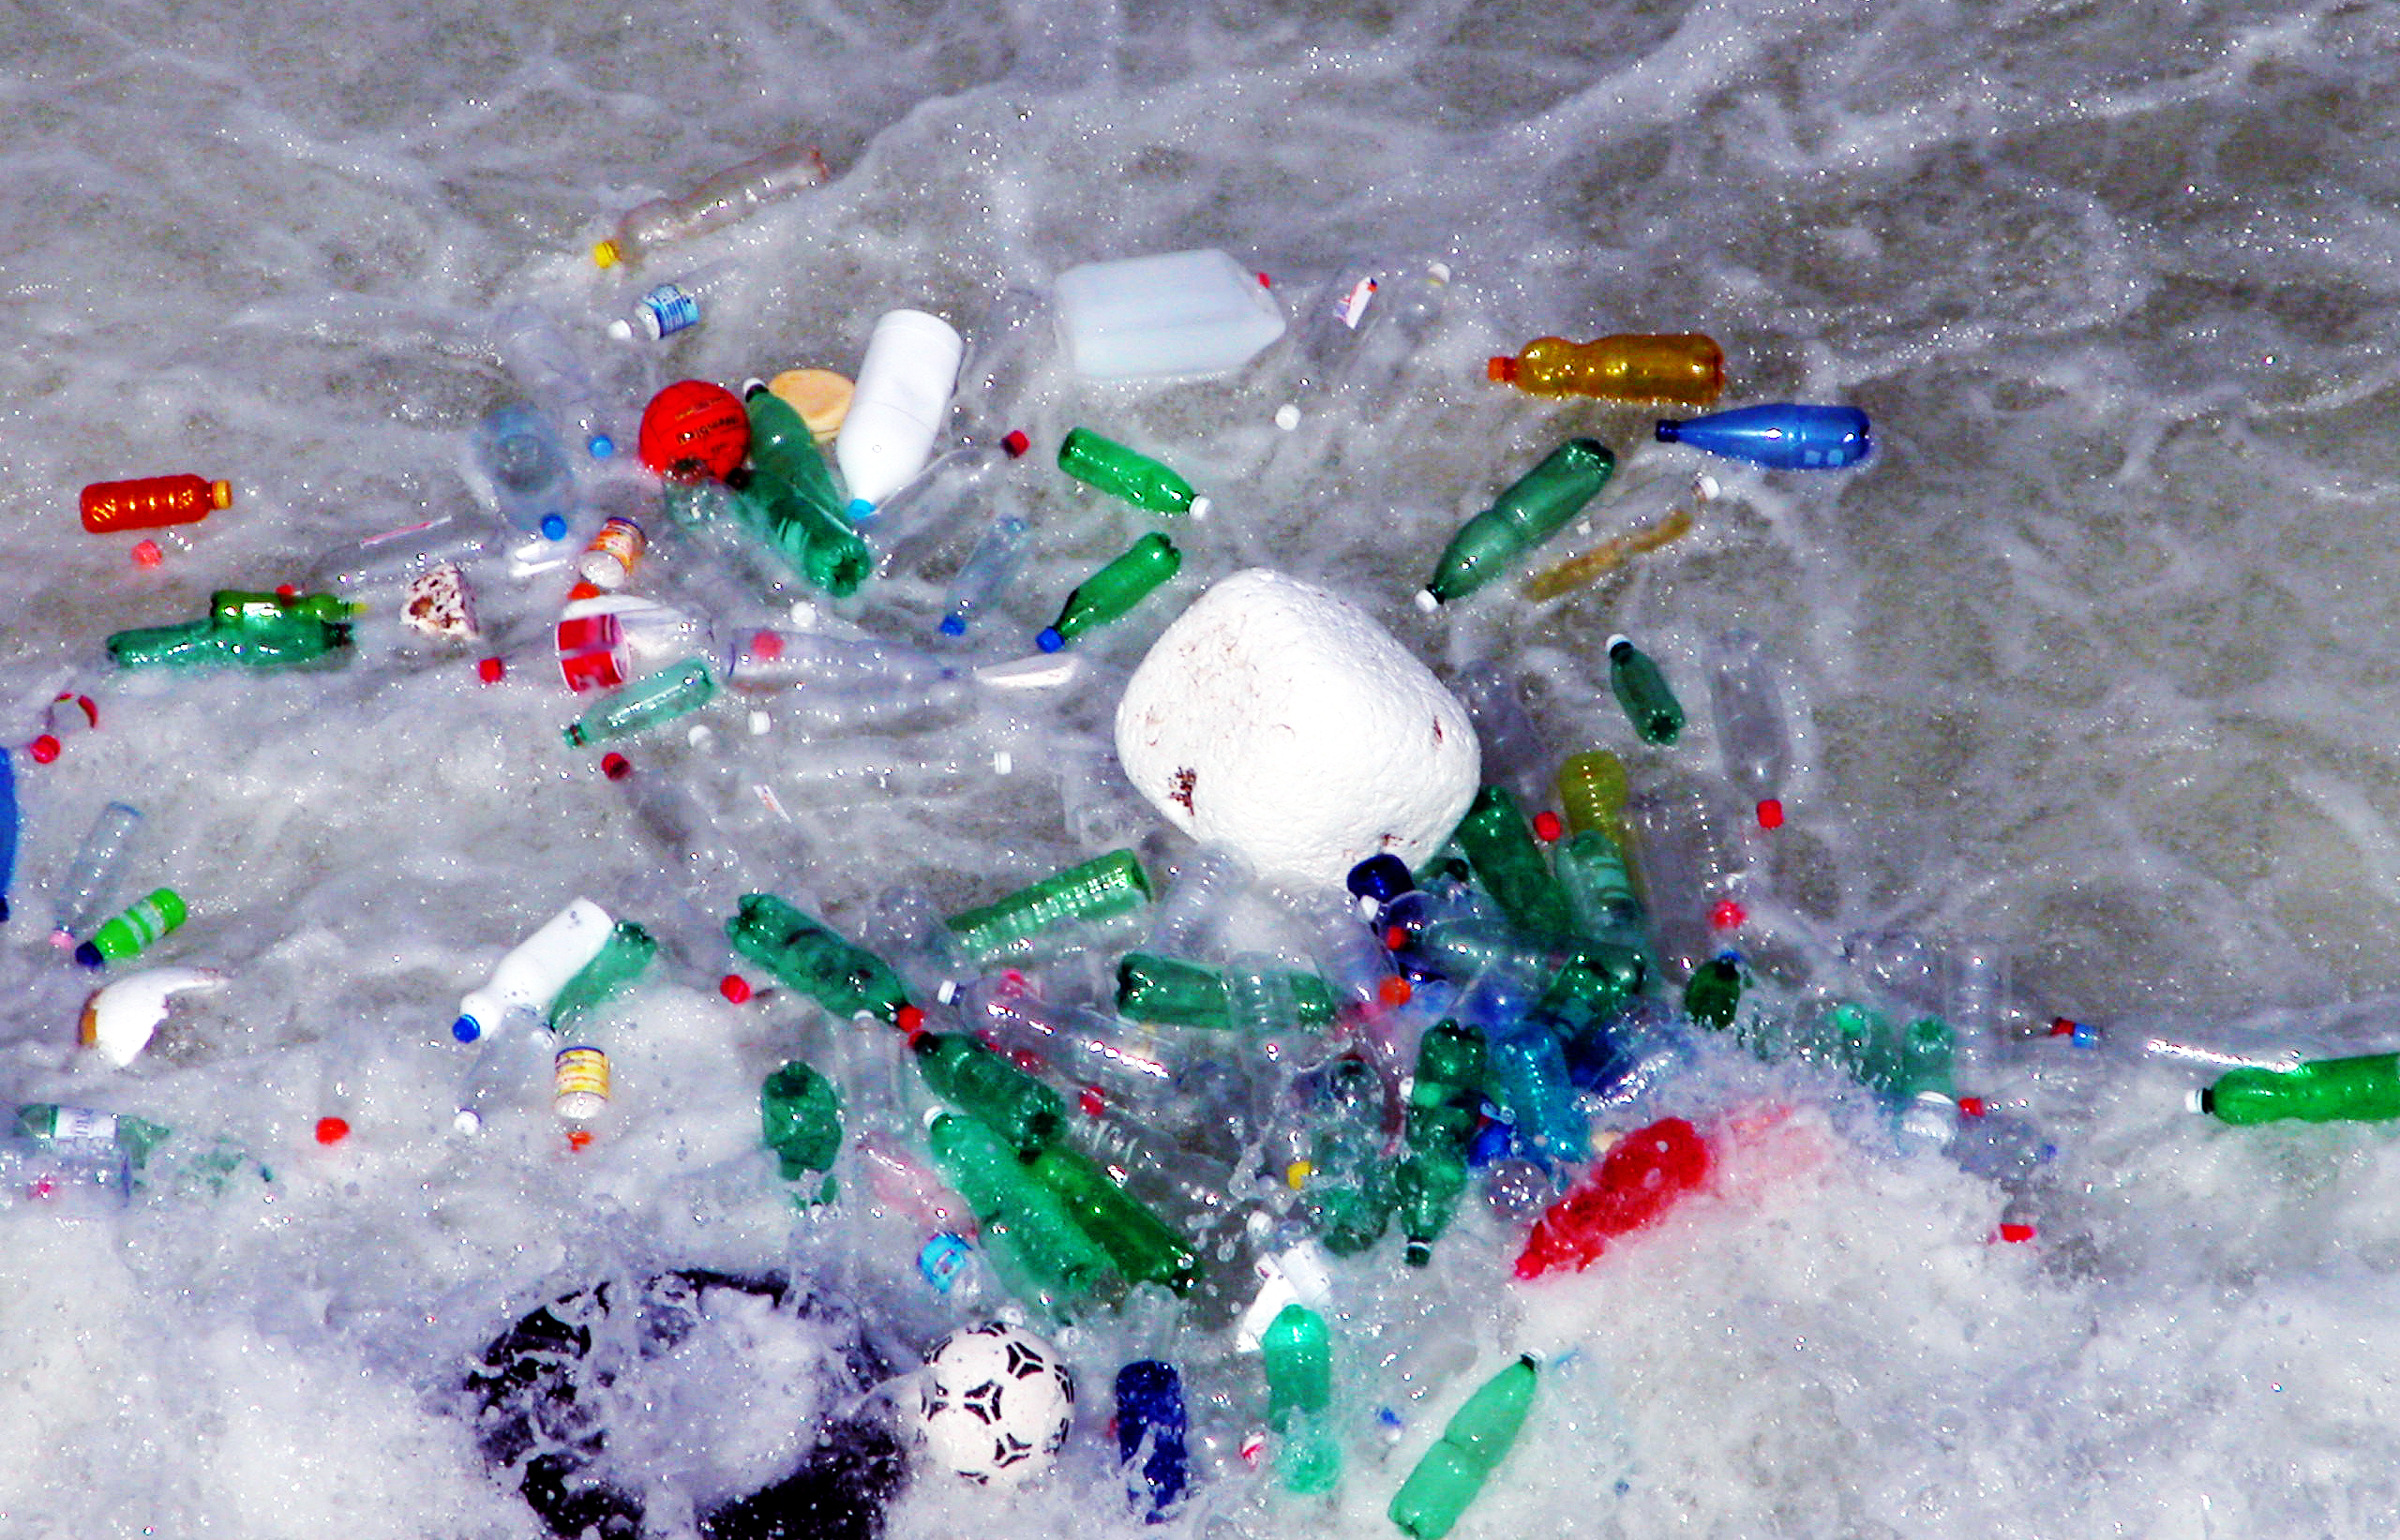 Plastic garbage